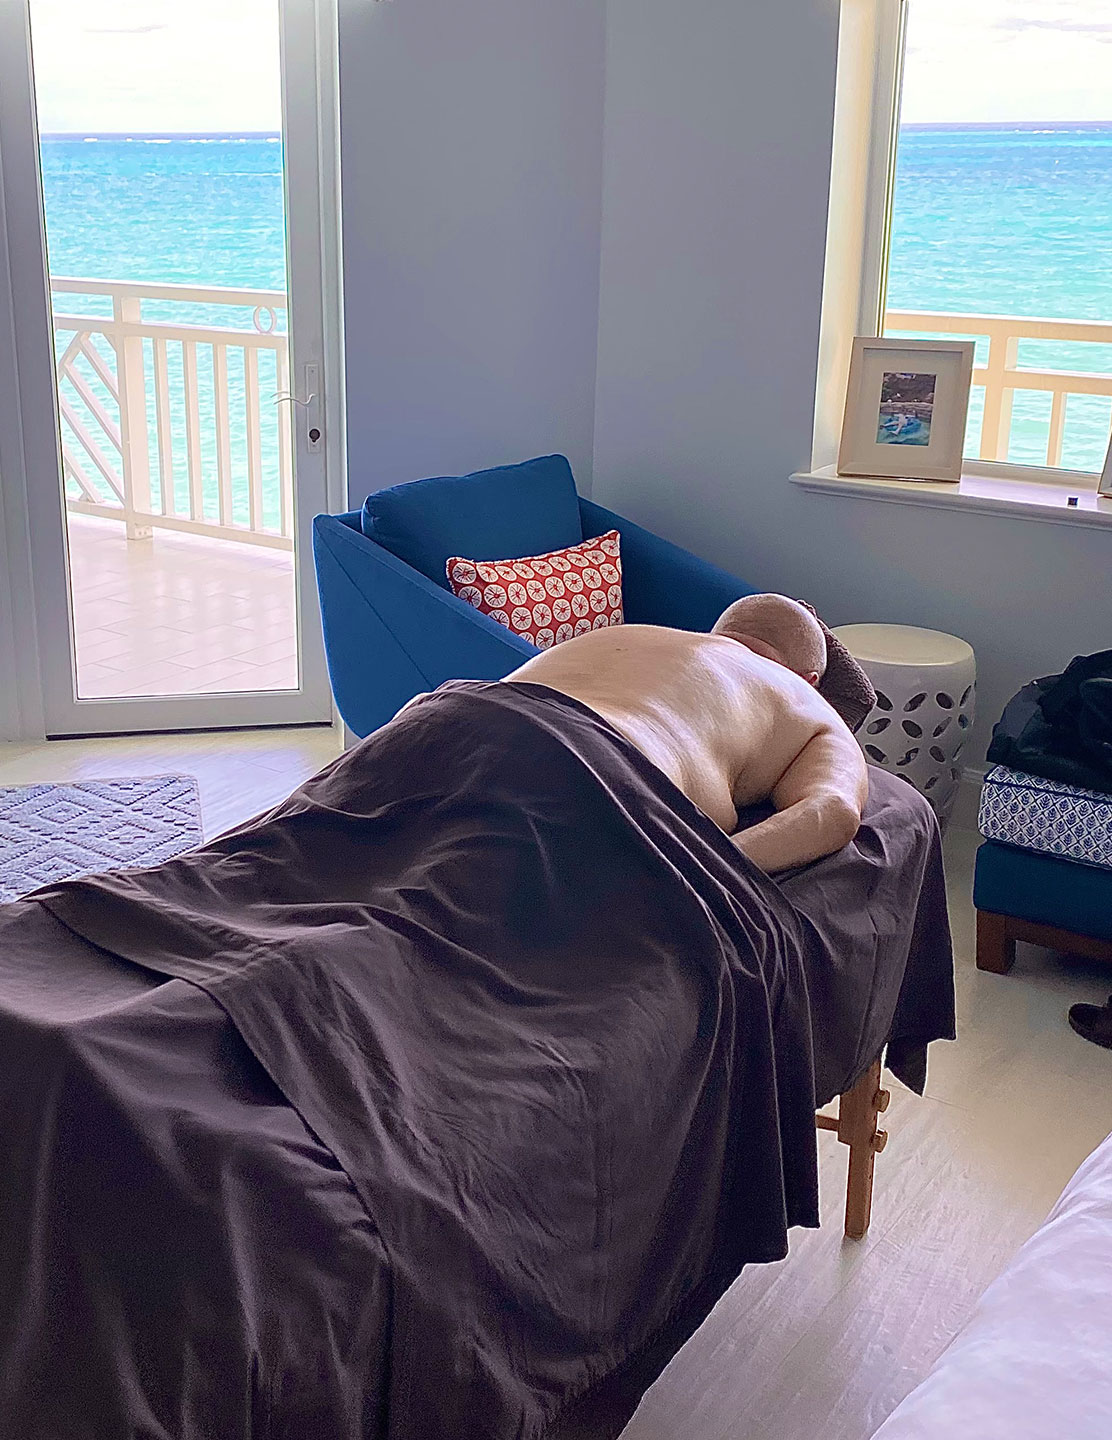 bahamas massage male mobile therapist airbnb hotel paradise island baha mar atlantis palm cay swedish deep tissue sports lymphatic massage